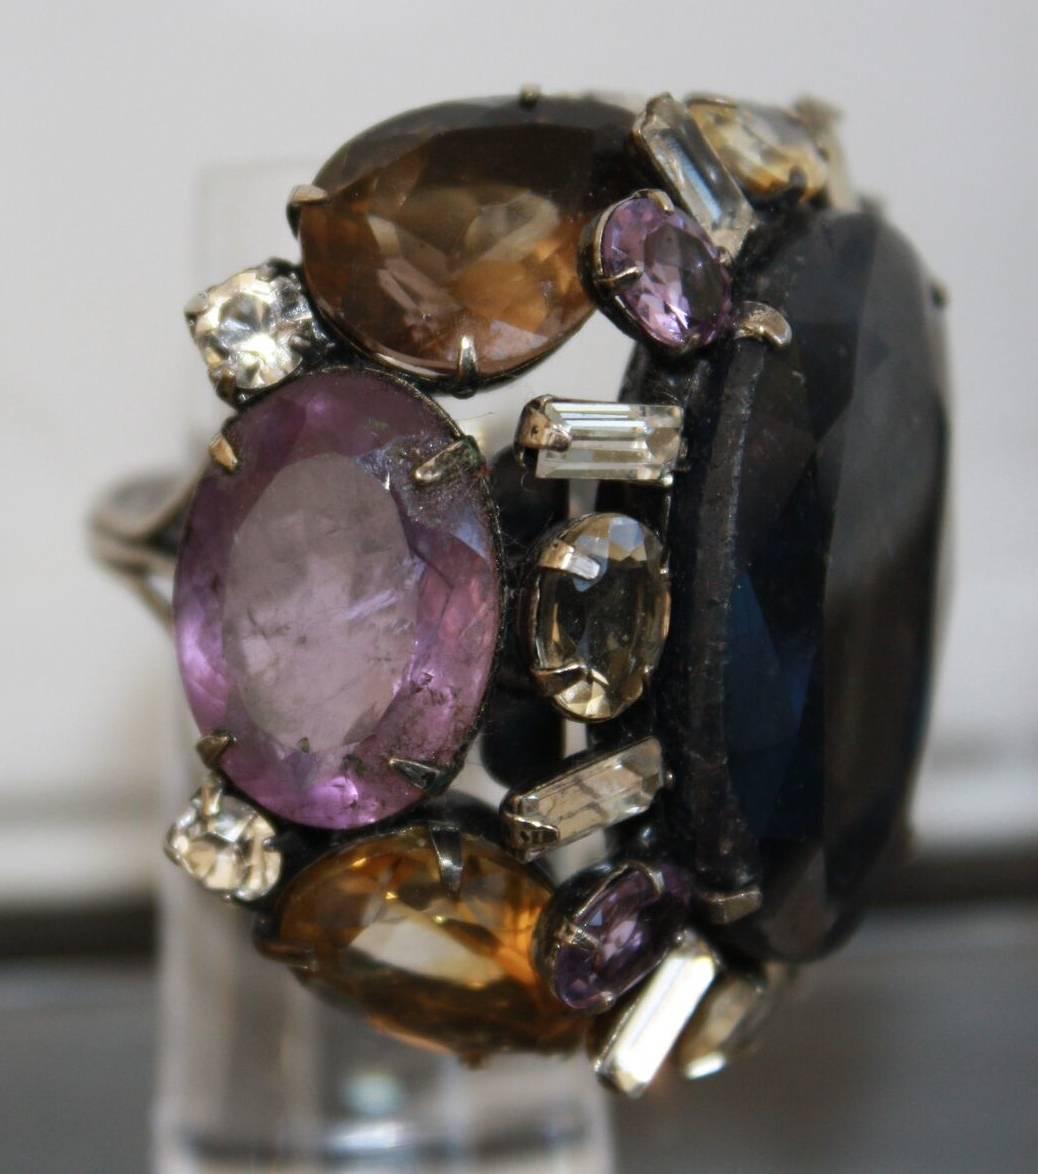 Amethyst, cabochon sapphire, smokey quartz, lemon quartz, and Swarovski crystal ring from Iradj Moini. 

Inside adjustable sizer allows ring to fit sizes 4 - 7.5

